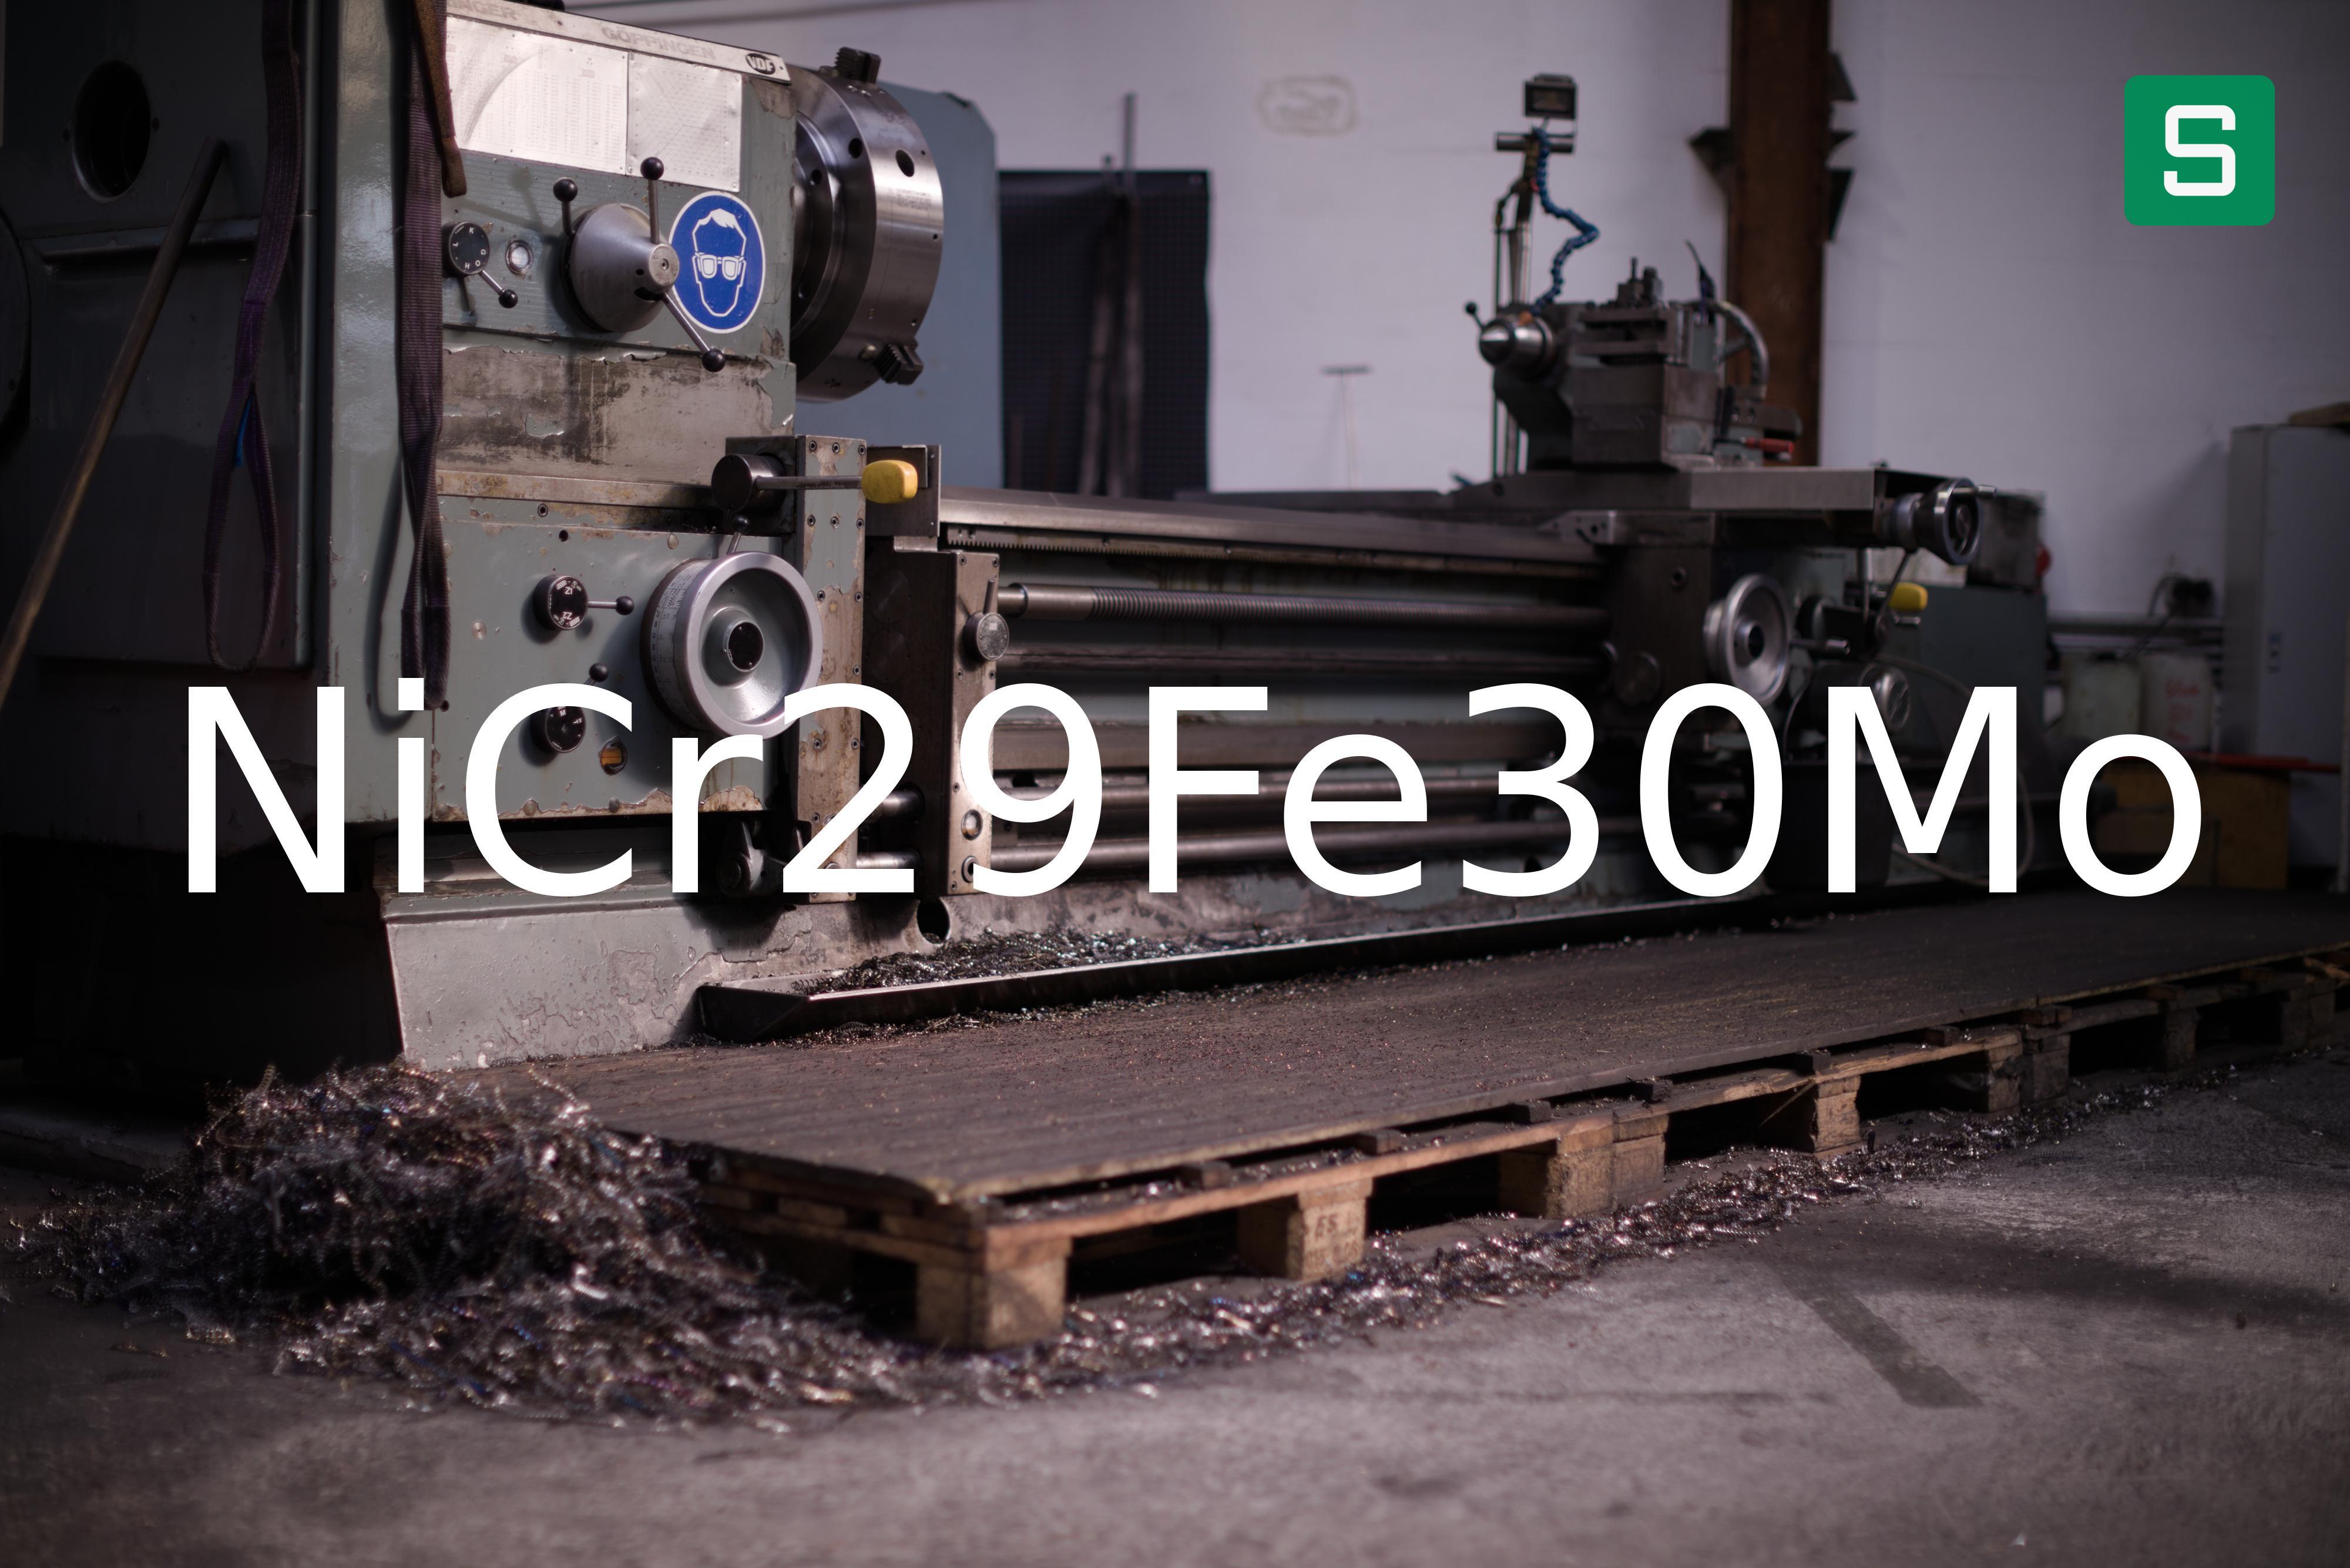 Steel Material: NiCr29Fe30Mo